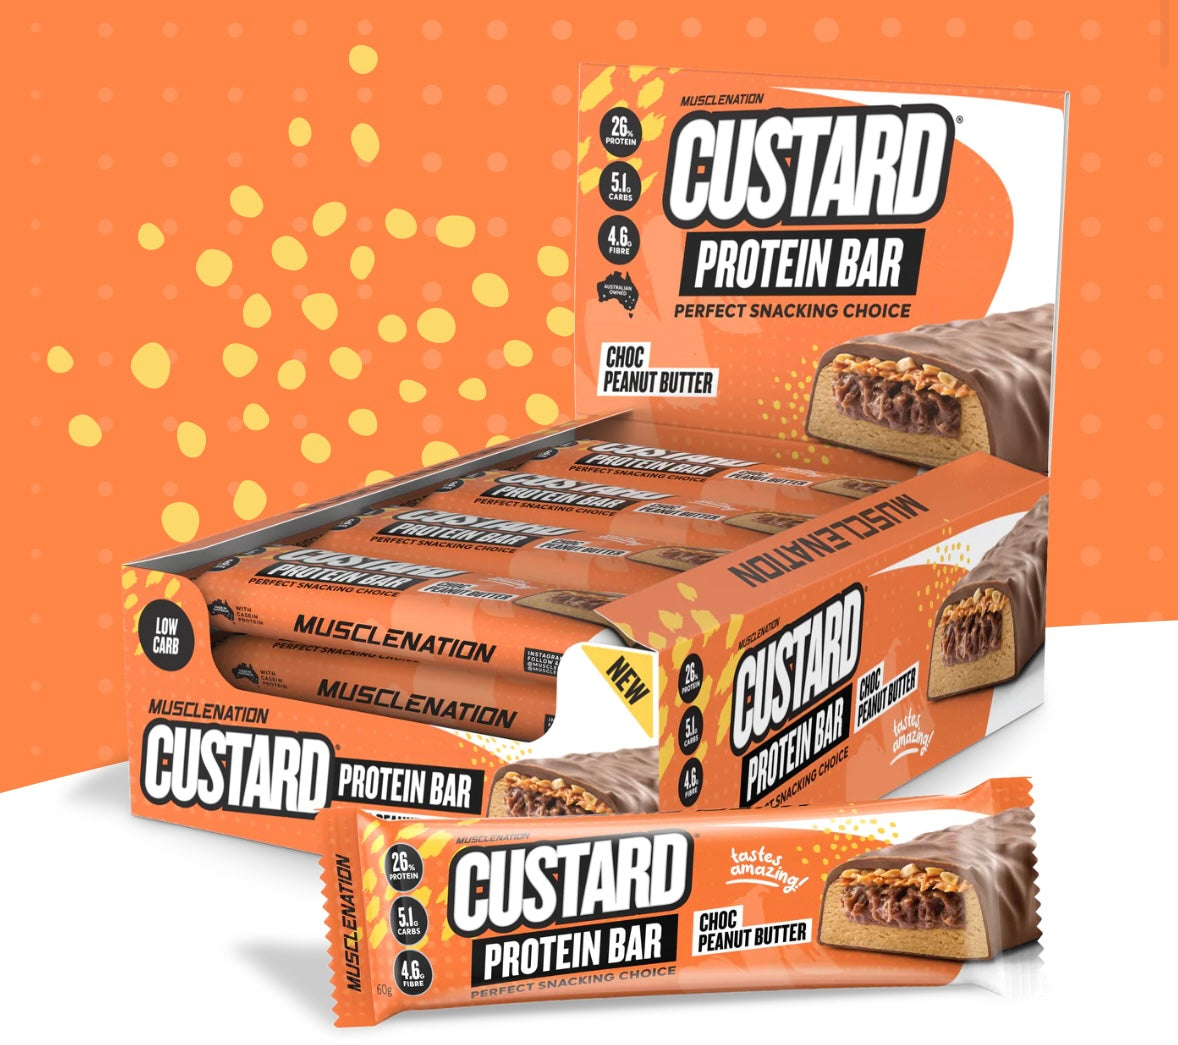 CUSTARD PROTEIN BAR Choc Peanut Butter - Box of 12